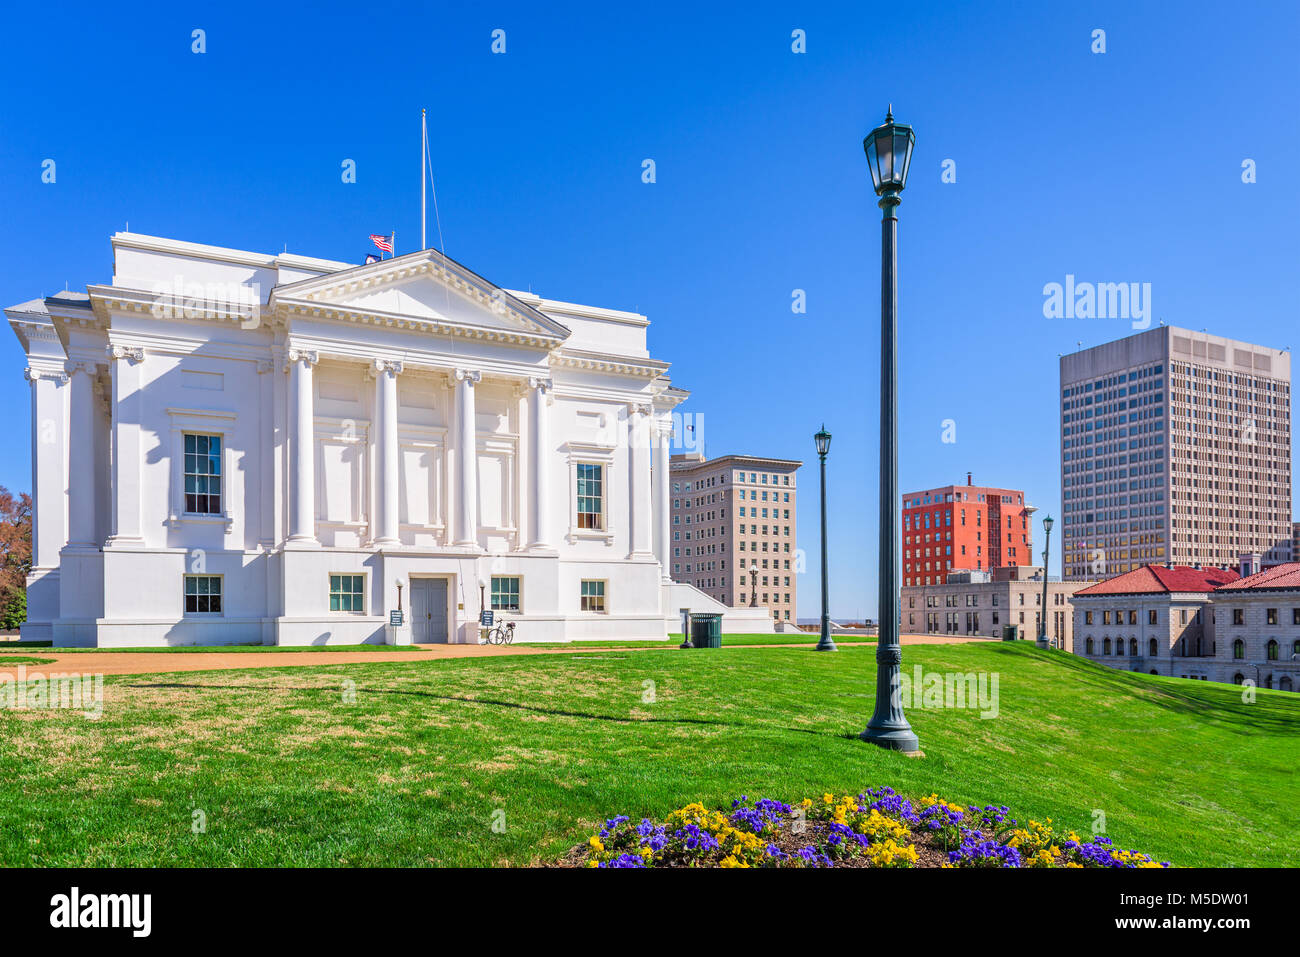 Virginia State Capitol building in Richmond, Vriginia, USA. Stock Photo